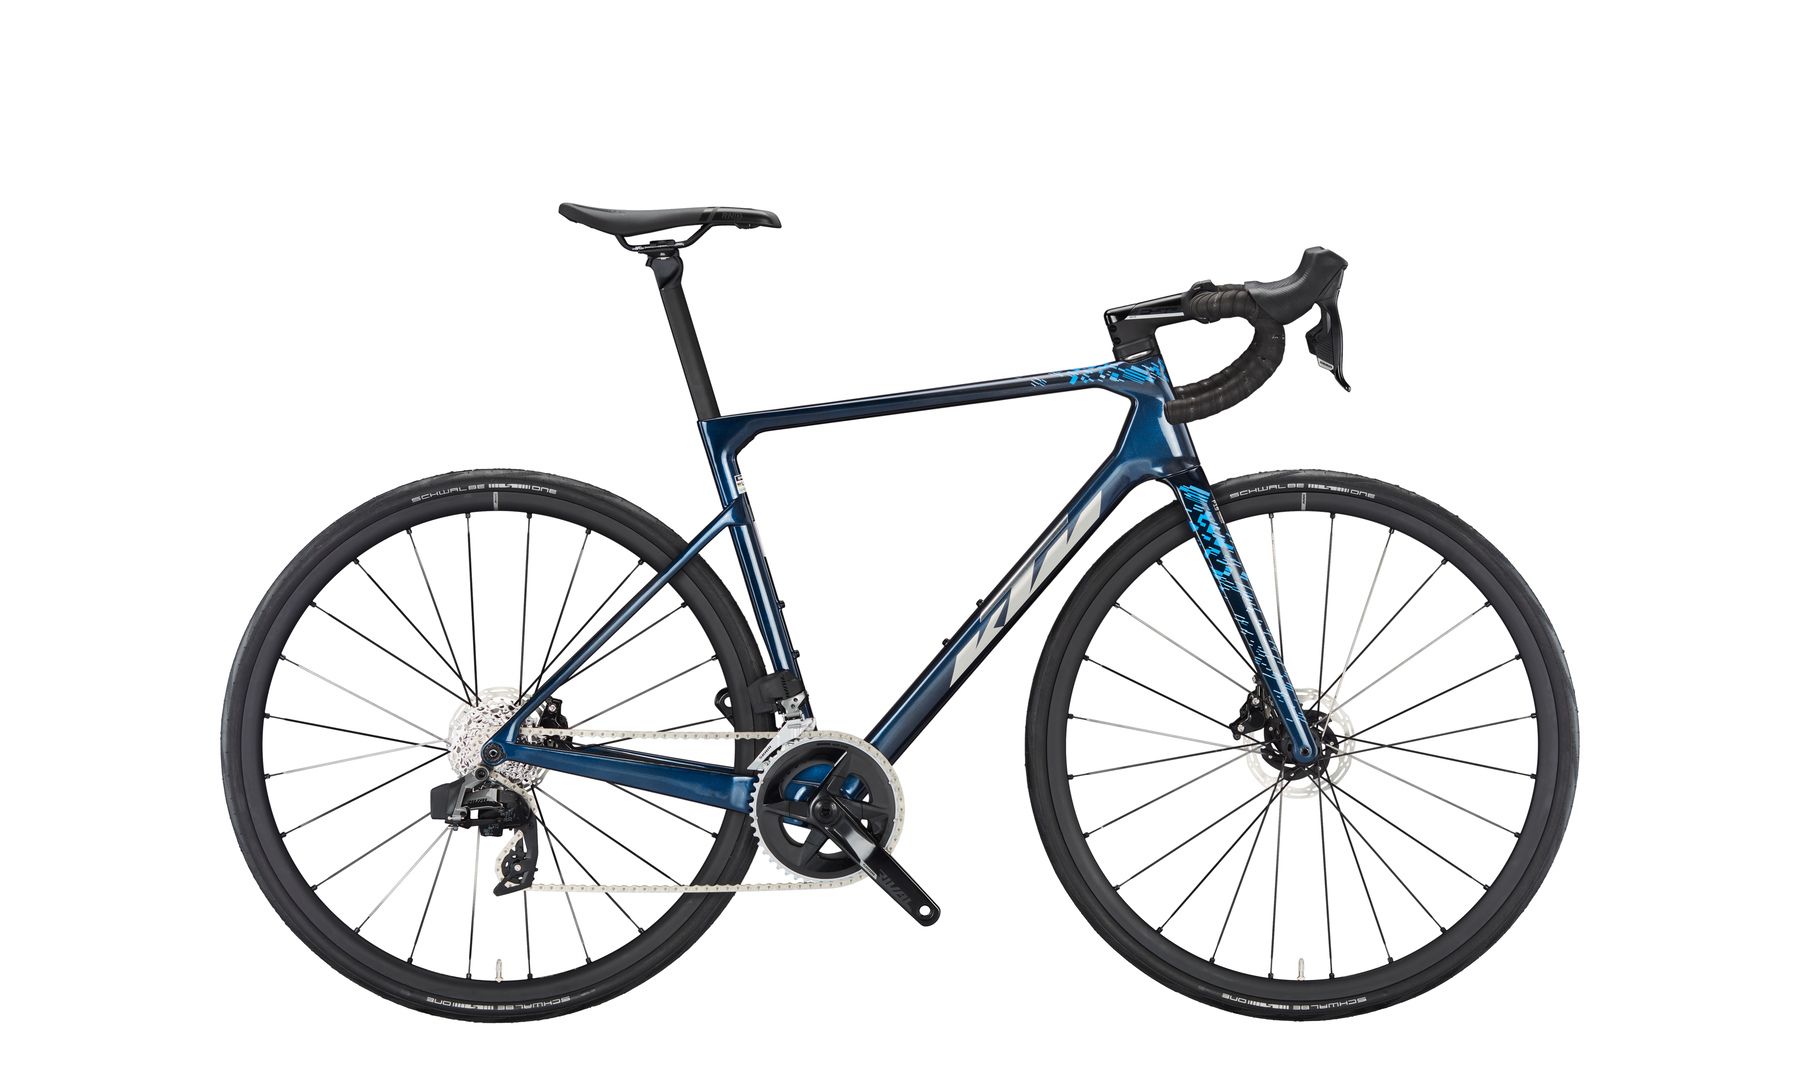 Bicycle KTM REVELATOR ALTO ELITE SRAM Rival eTap AXS 2x12 transparent blue (chrome+blue) III